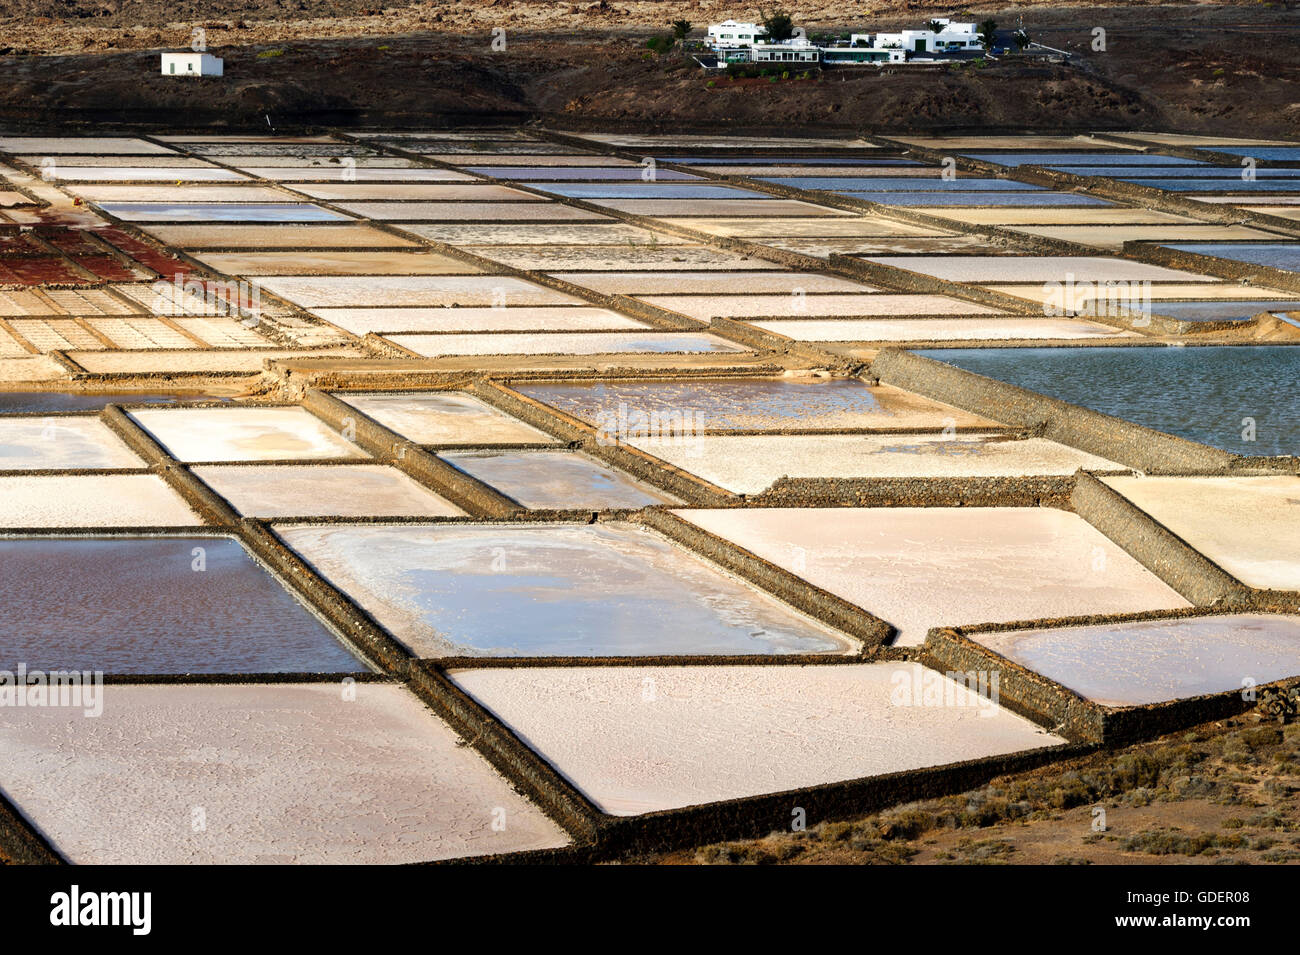 La soluzione salina, produzione di sale, Yaiza, Lanzarote, Isole Canarie, Spanien / Salinas de Janubio Foto Stock